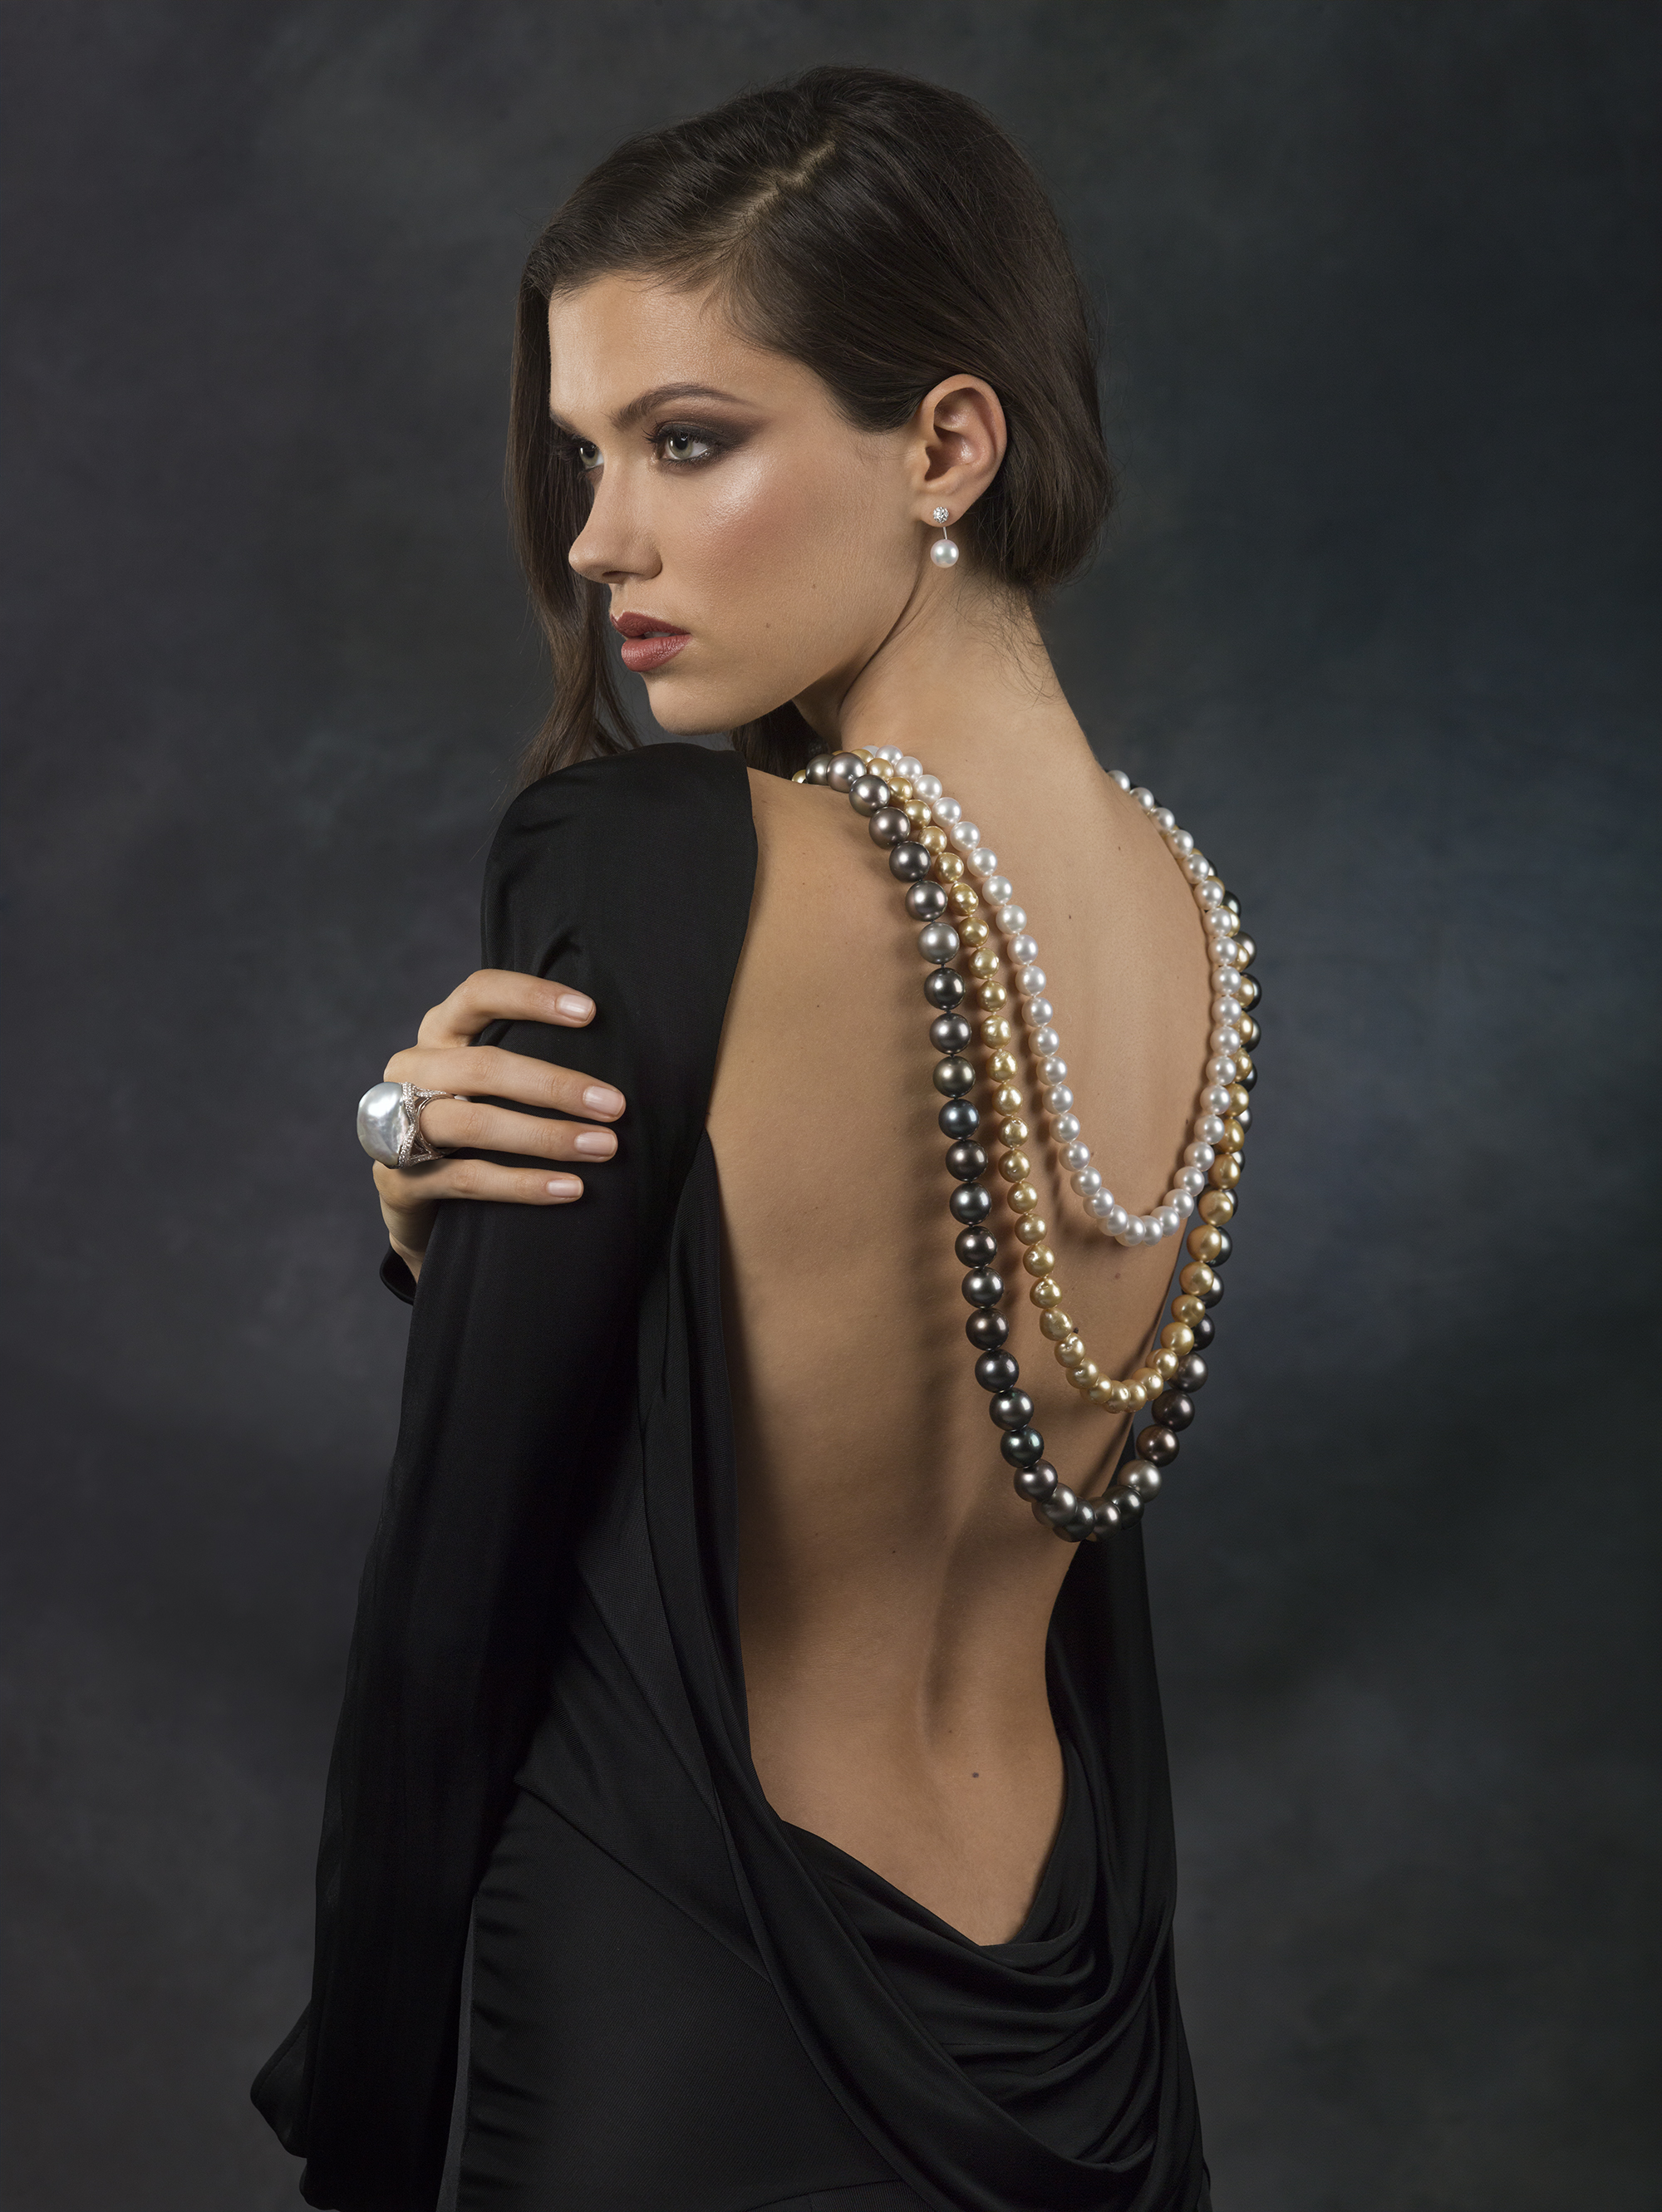 nyc_fashion_photographer_beauty_jewelry